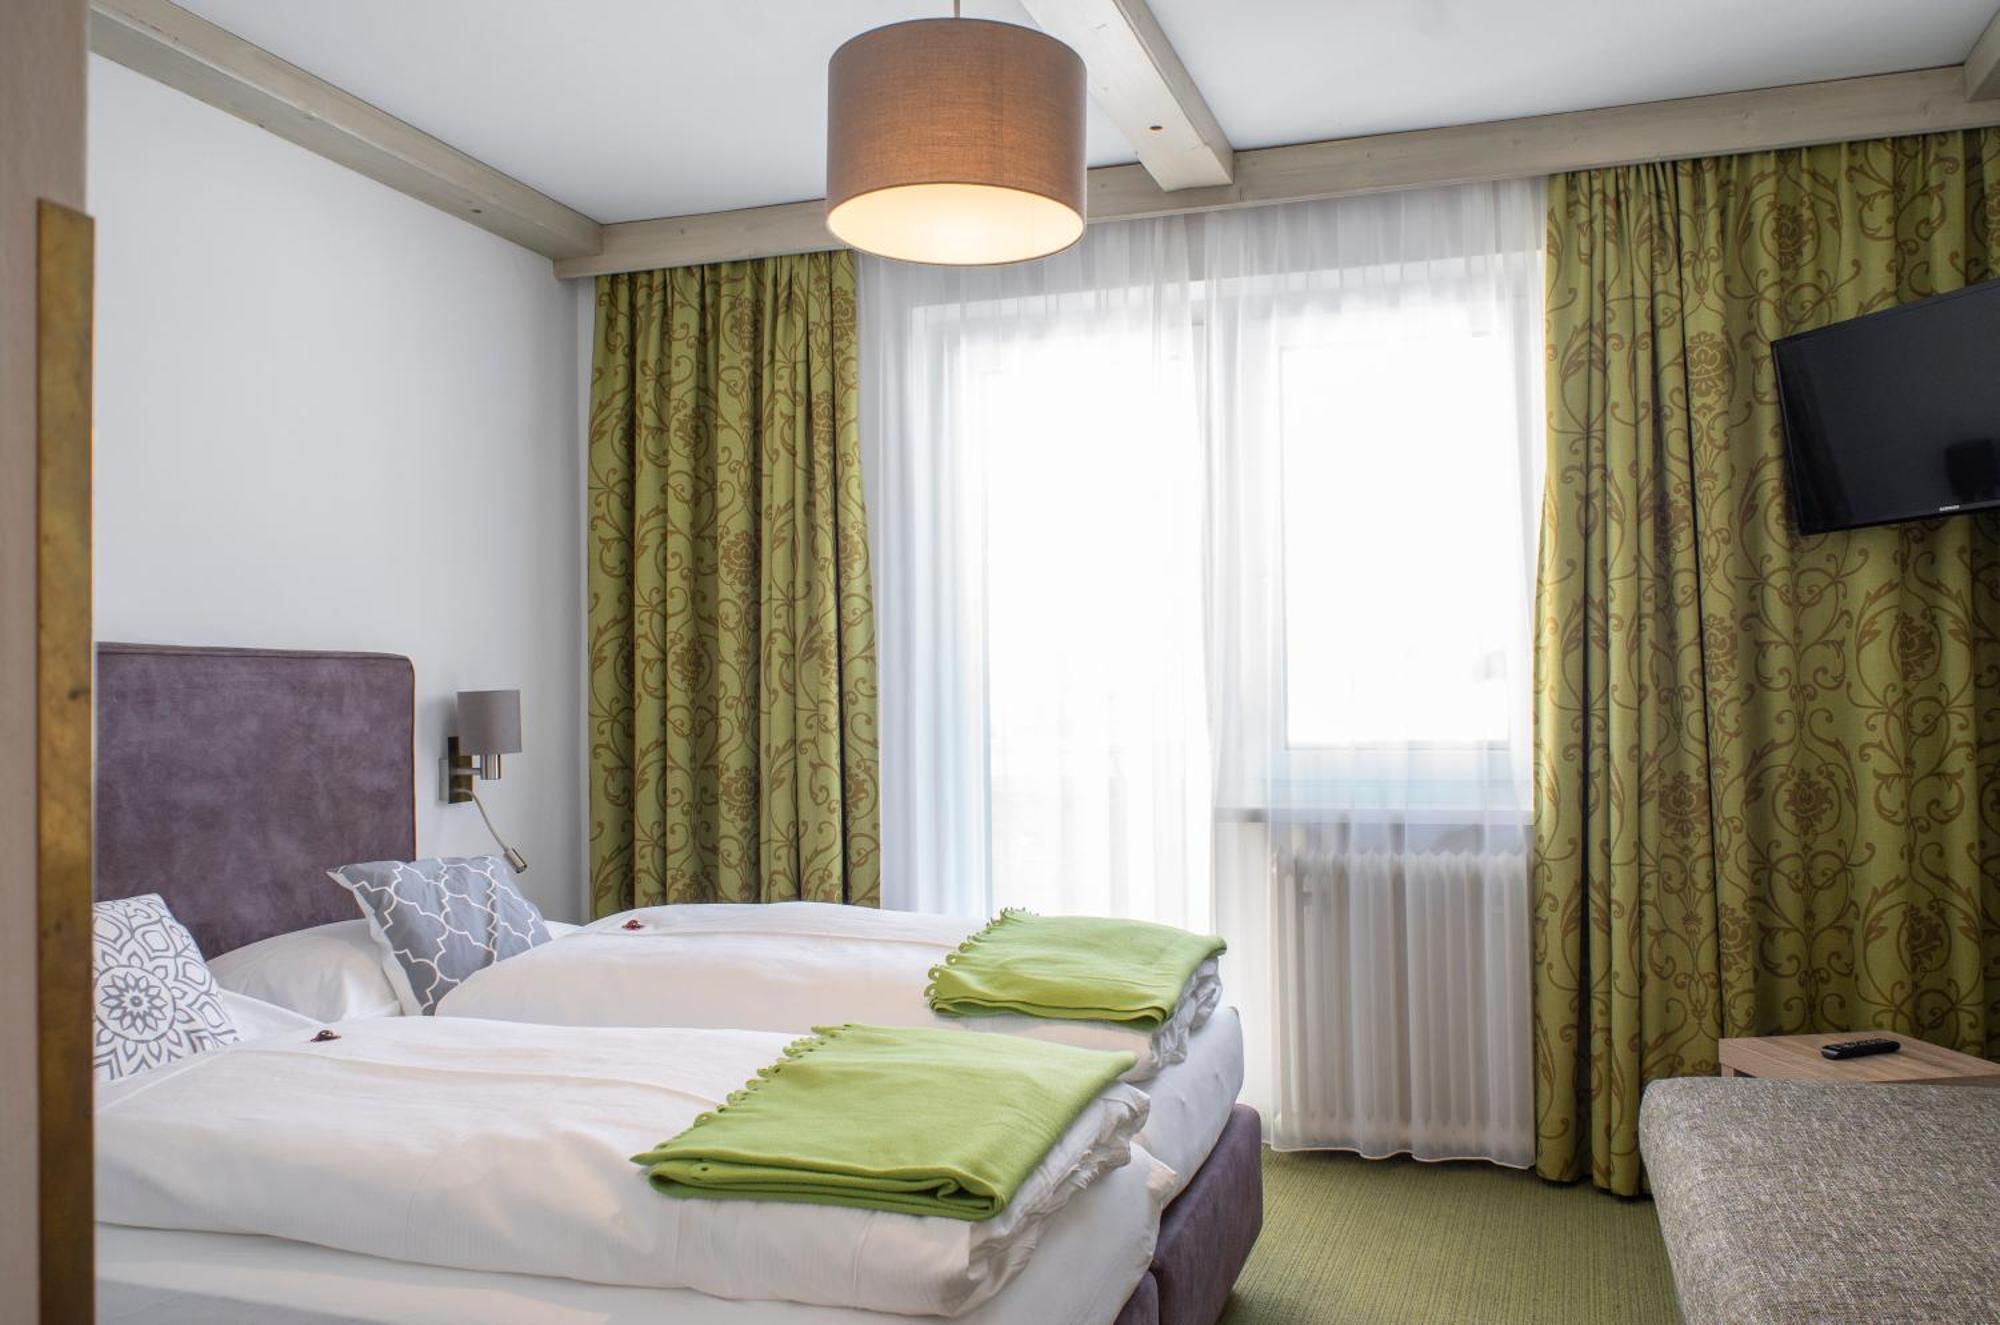 Hotel Garni Wieshof Rauris Kültér fotó